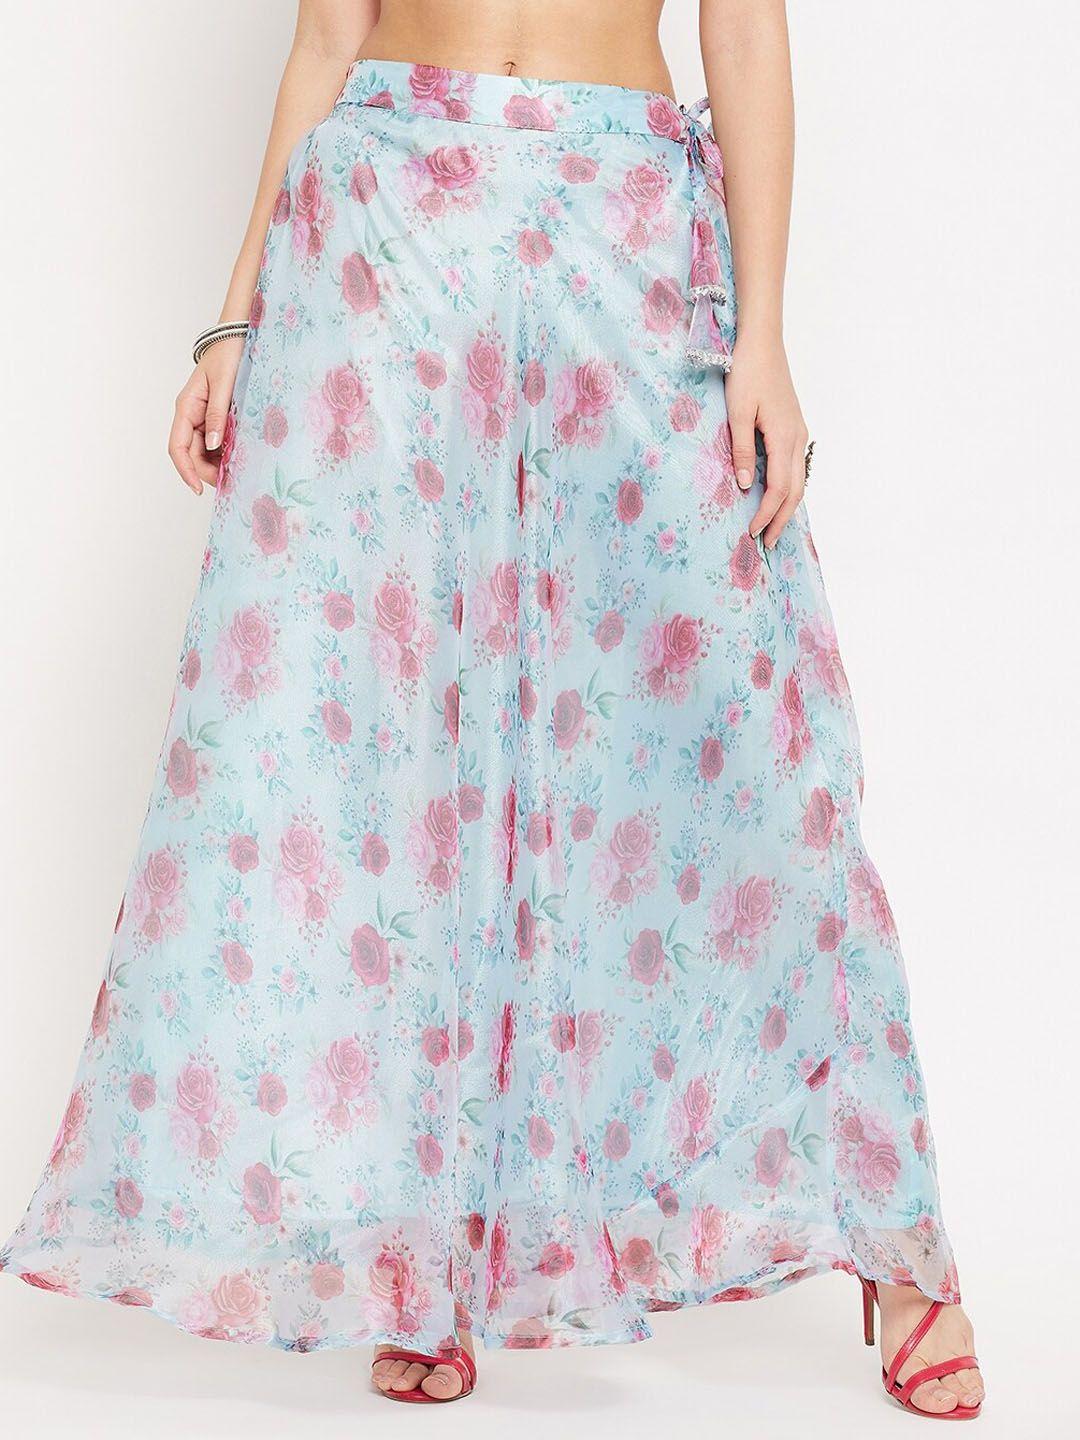 clora-creation-sky-blue-floral-printed-organza-skirt